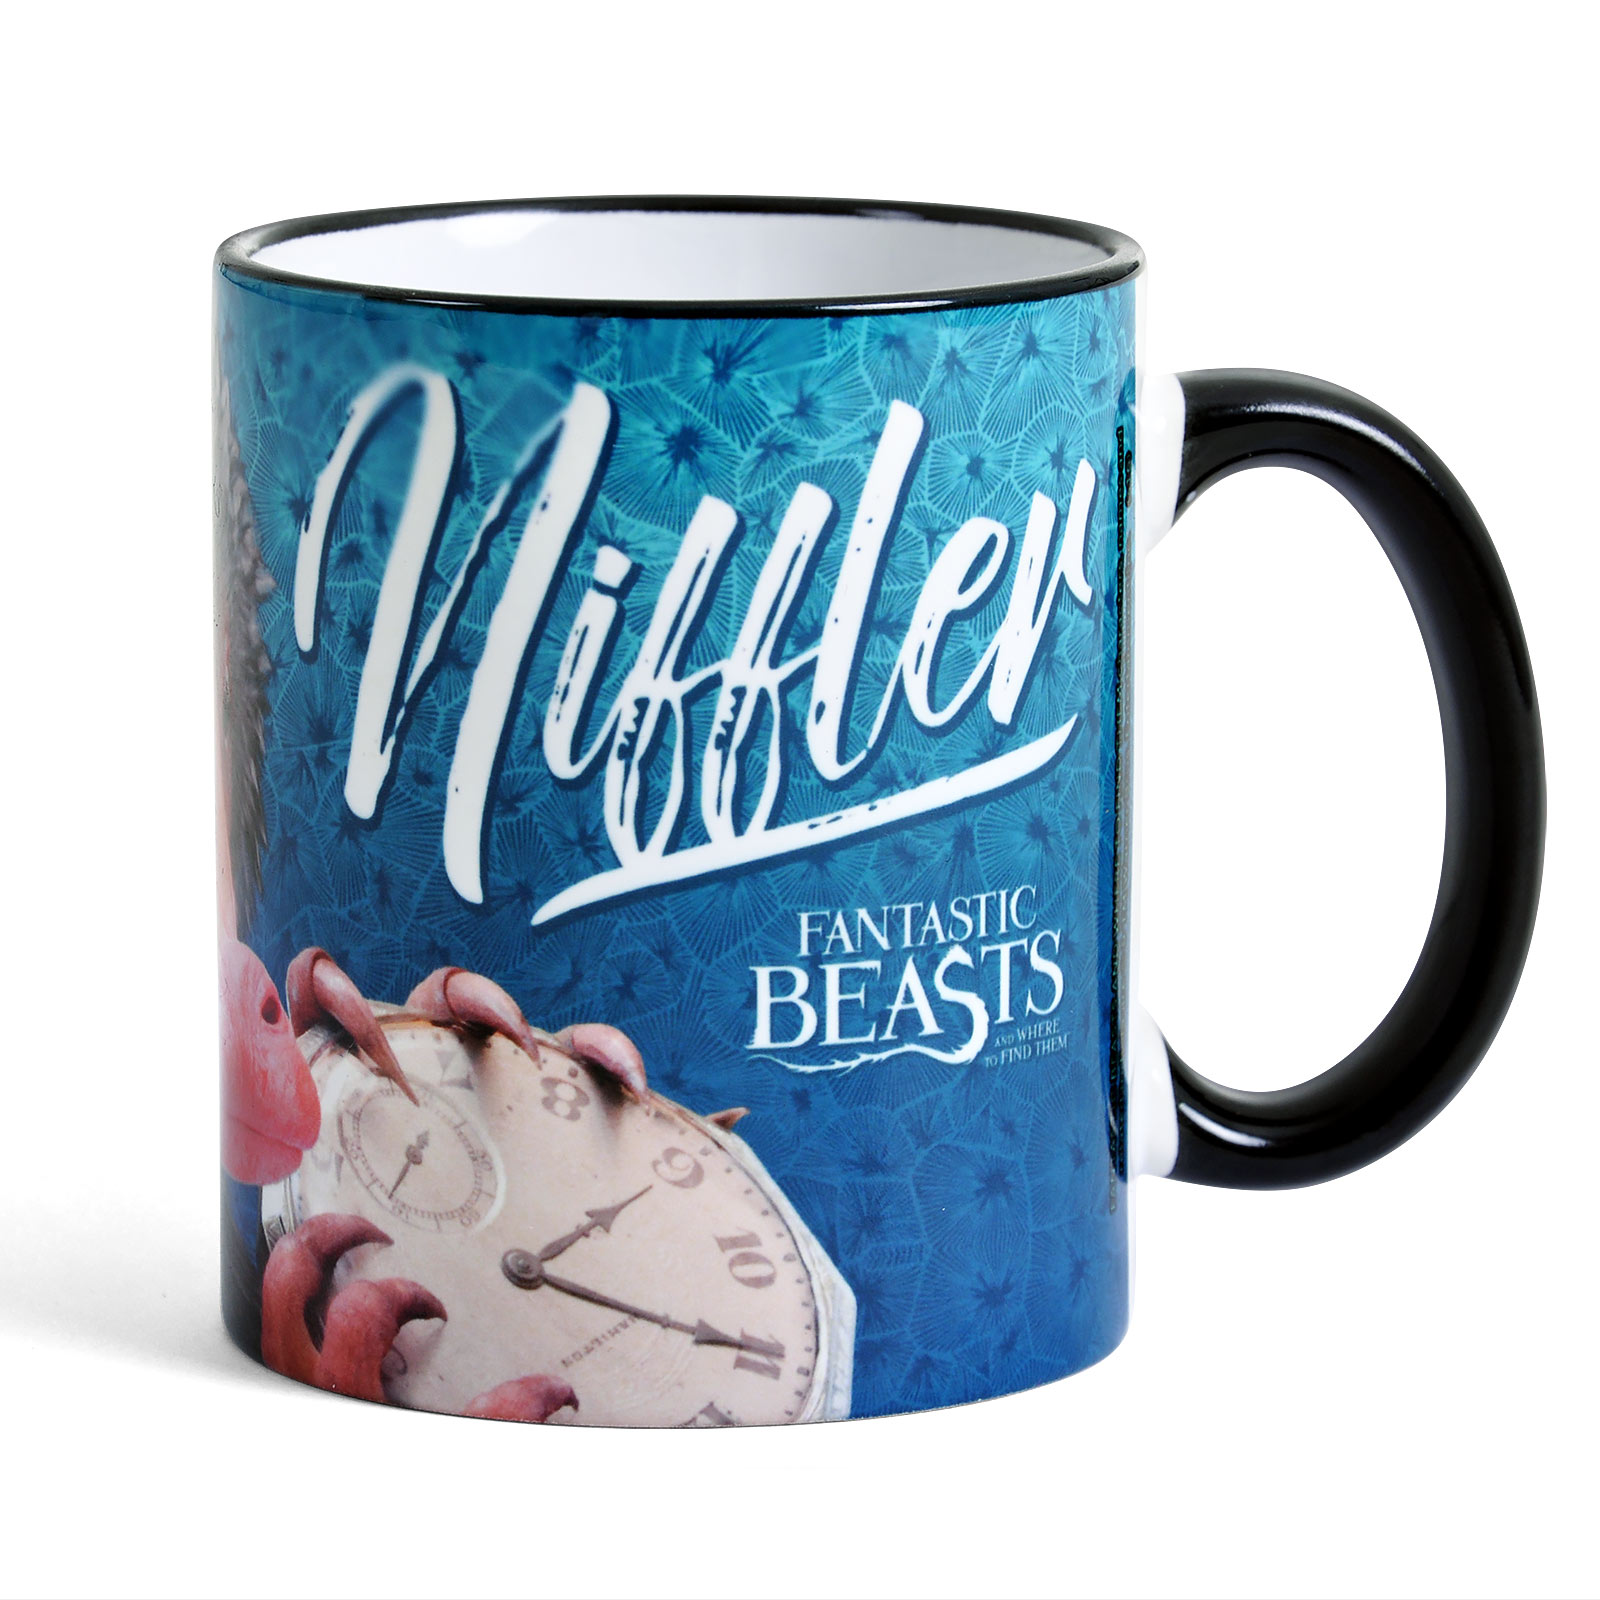 Niffler Treasure - Fantastic Beasts Cup